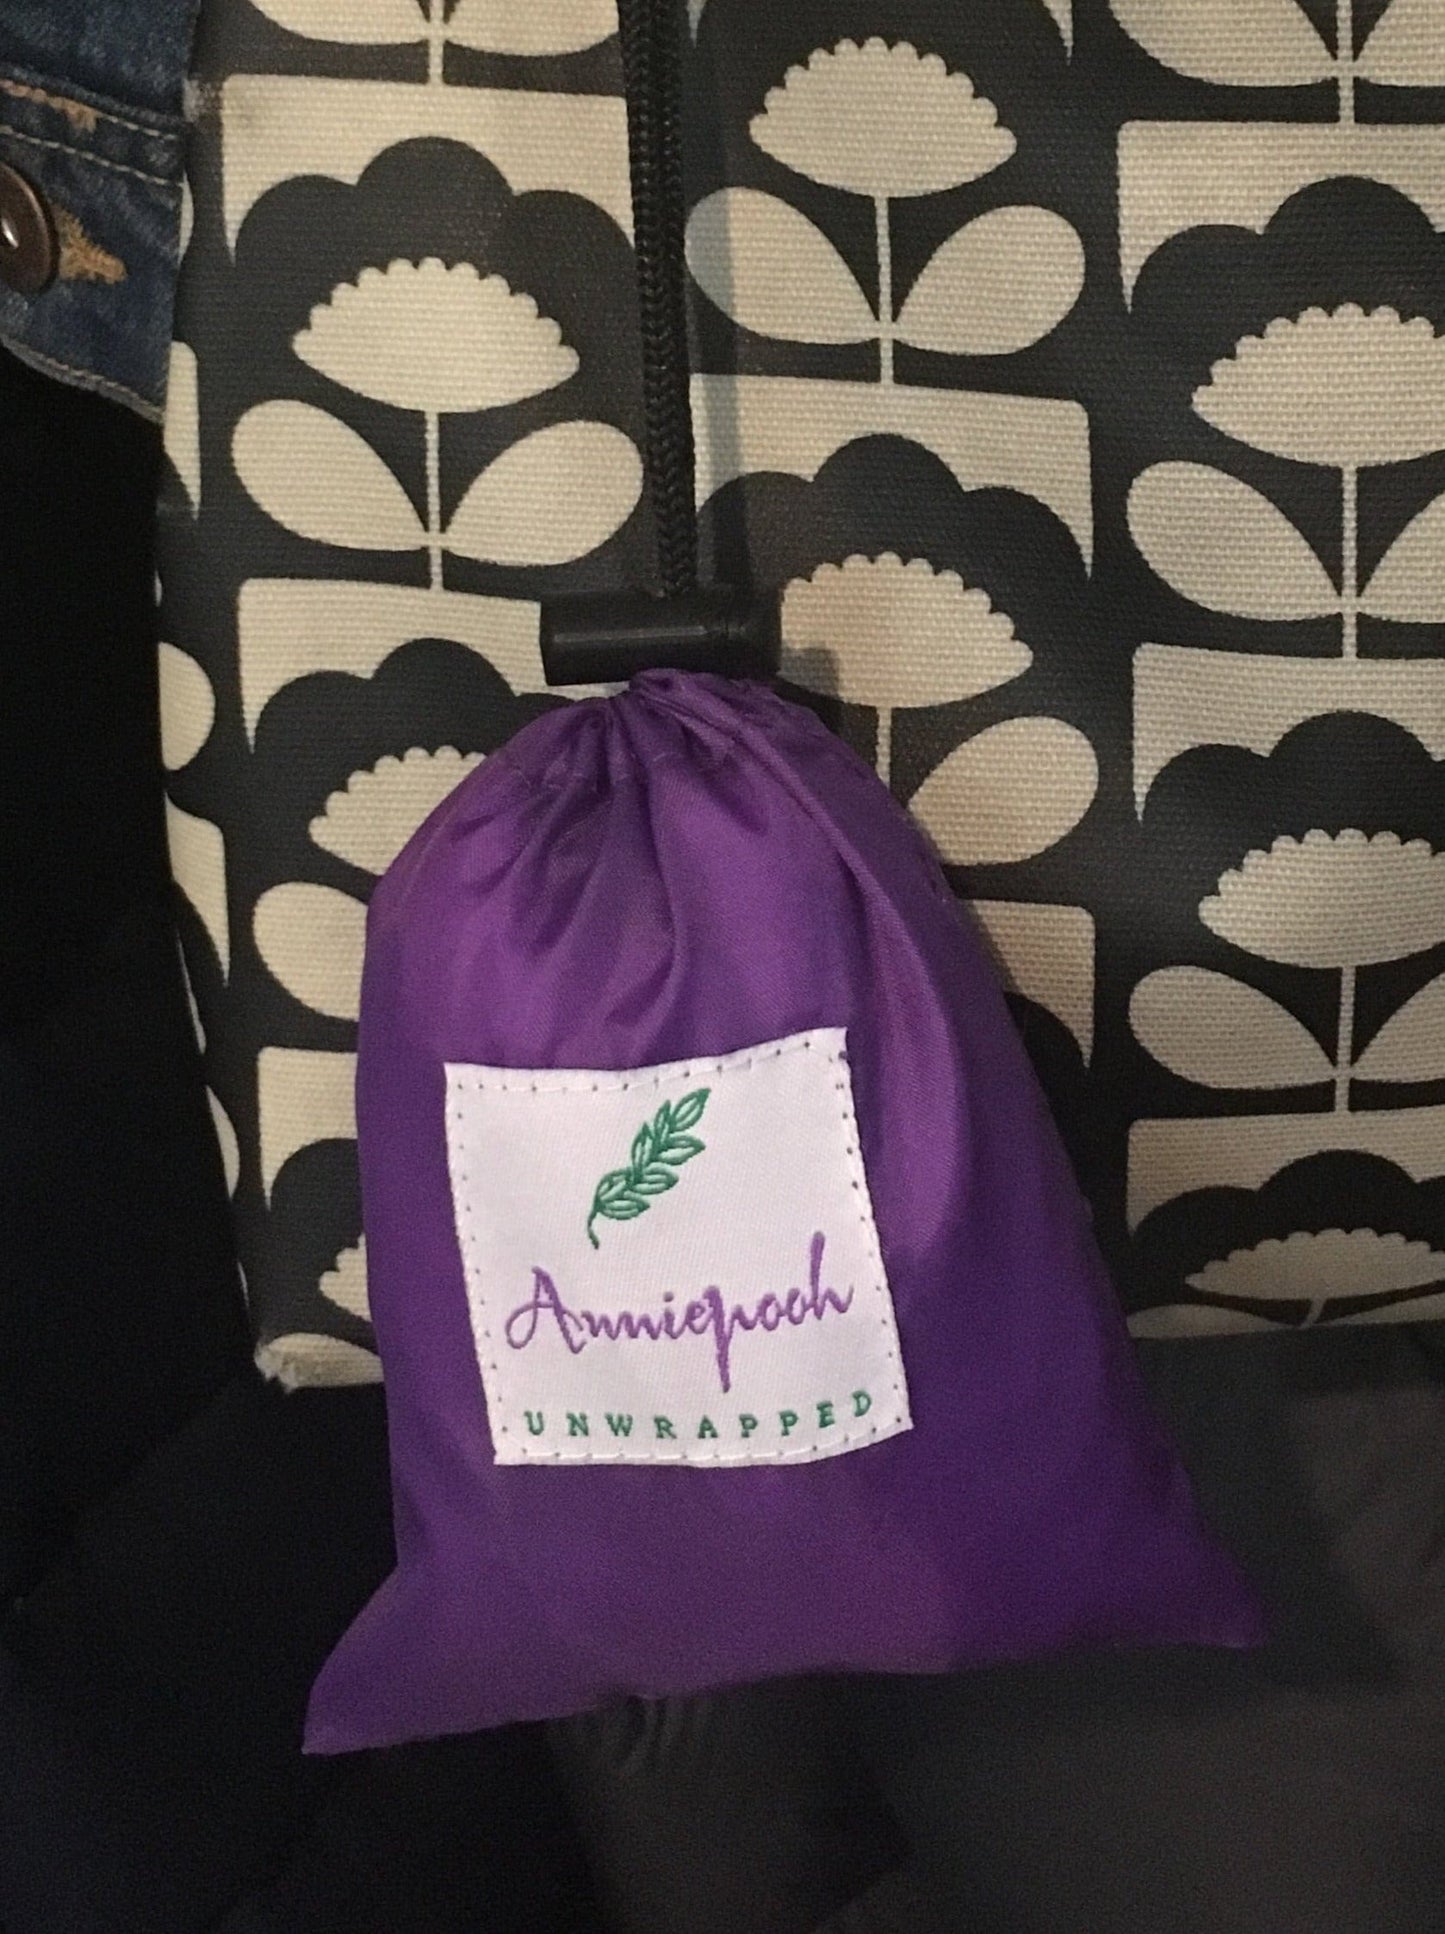 Anniepooh Purple Reusable Produce Bags 5 pack